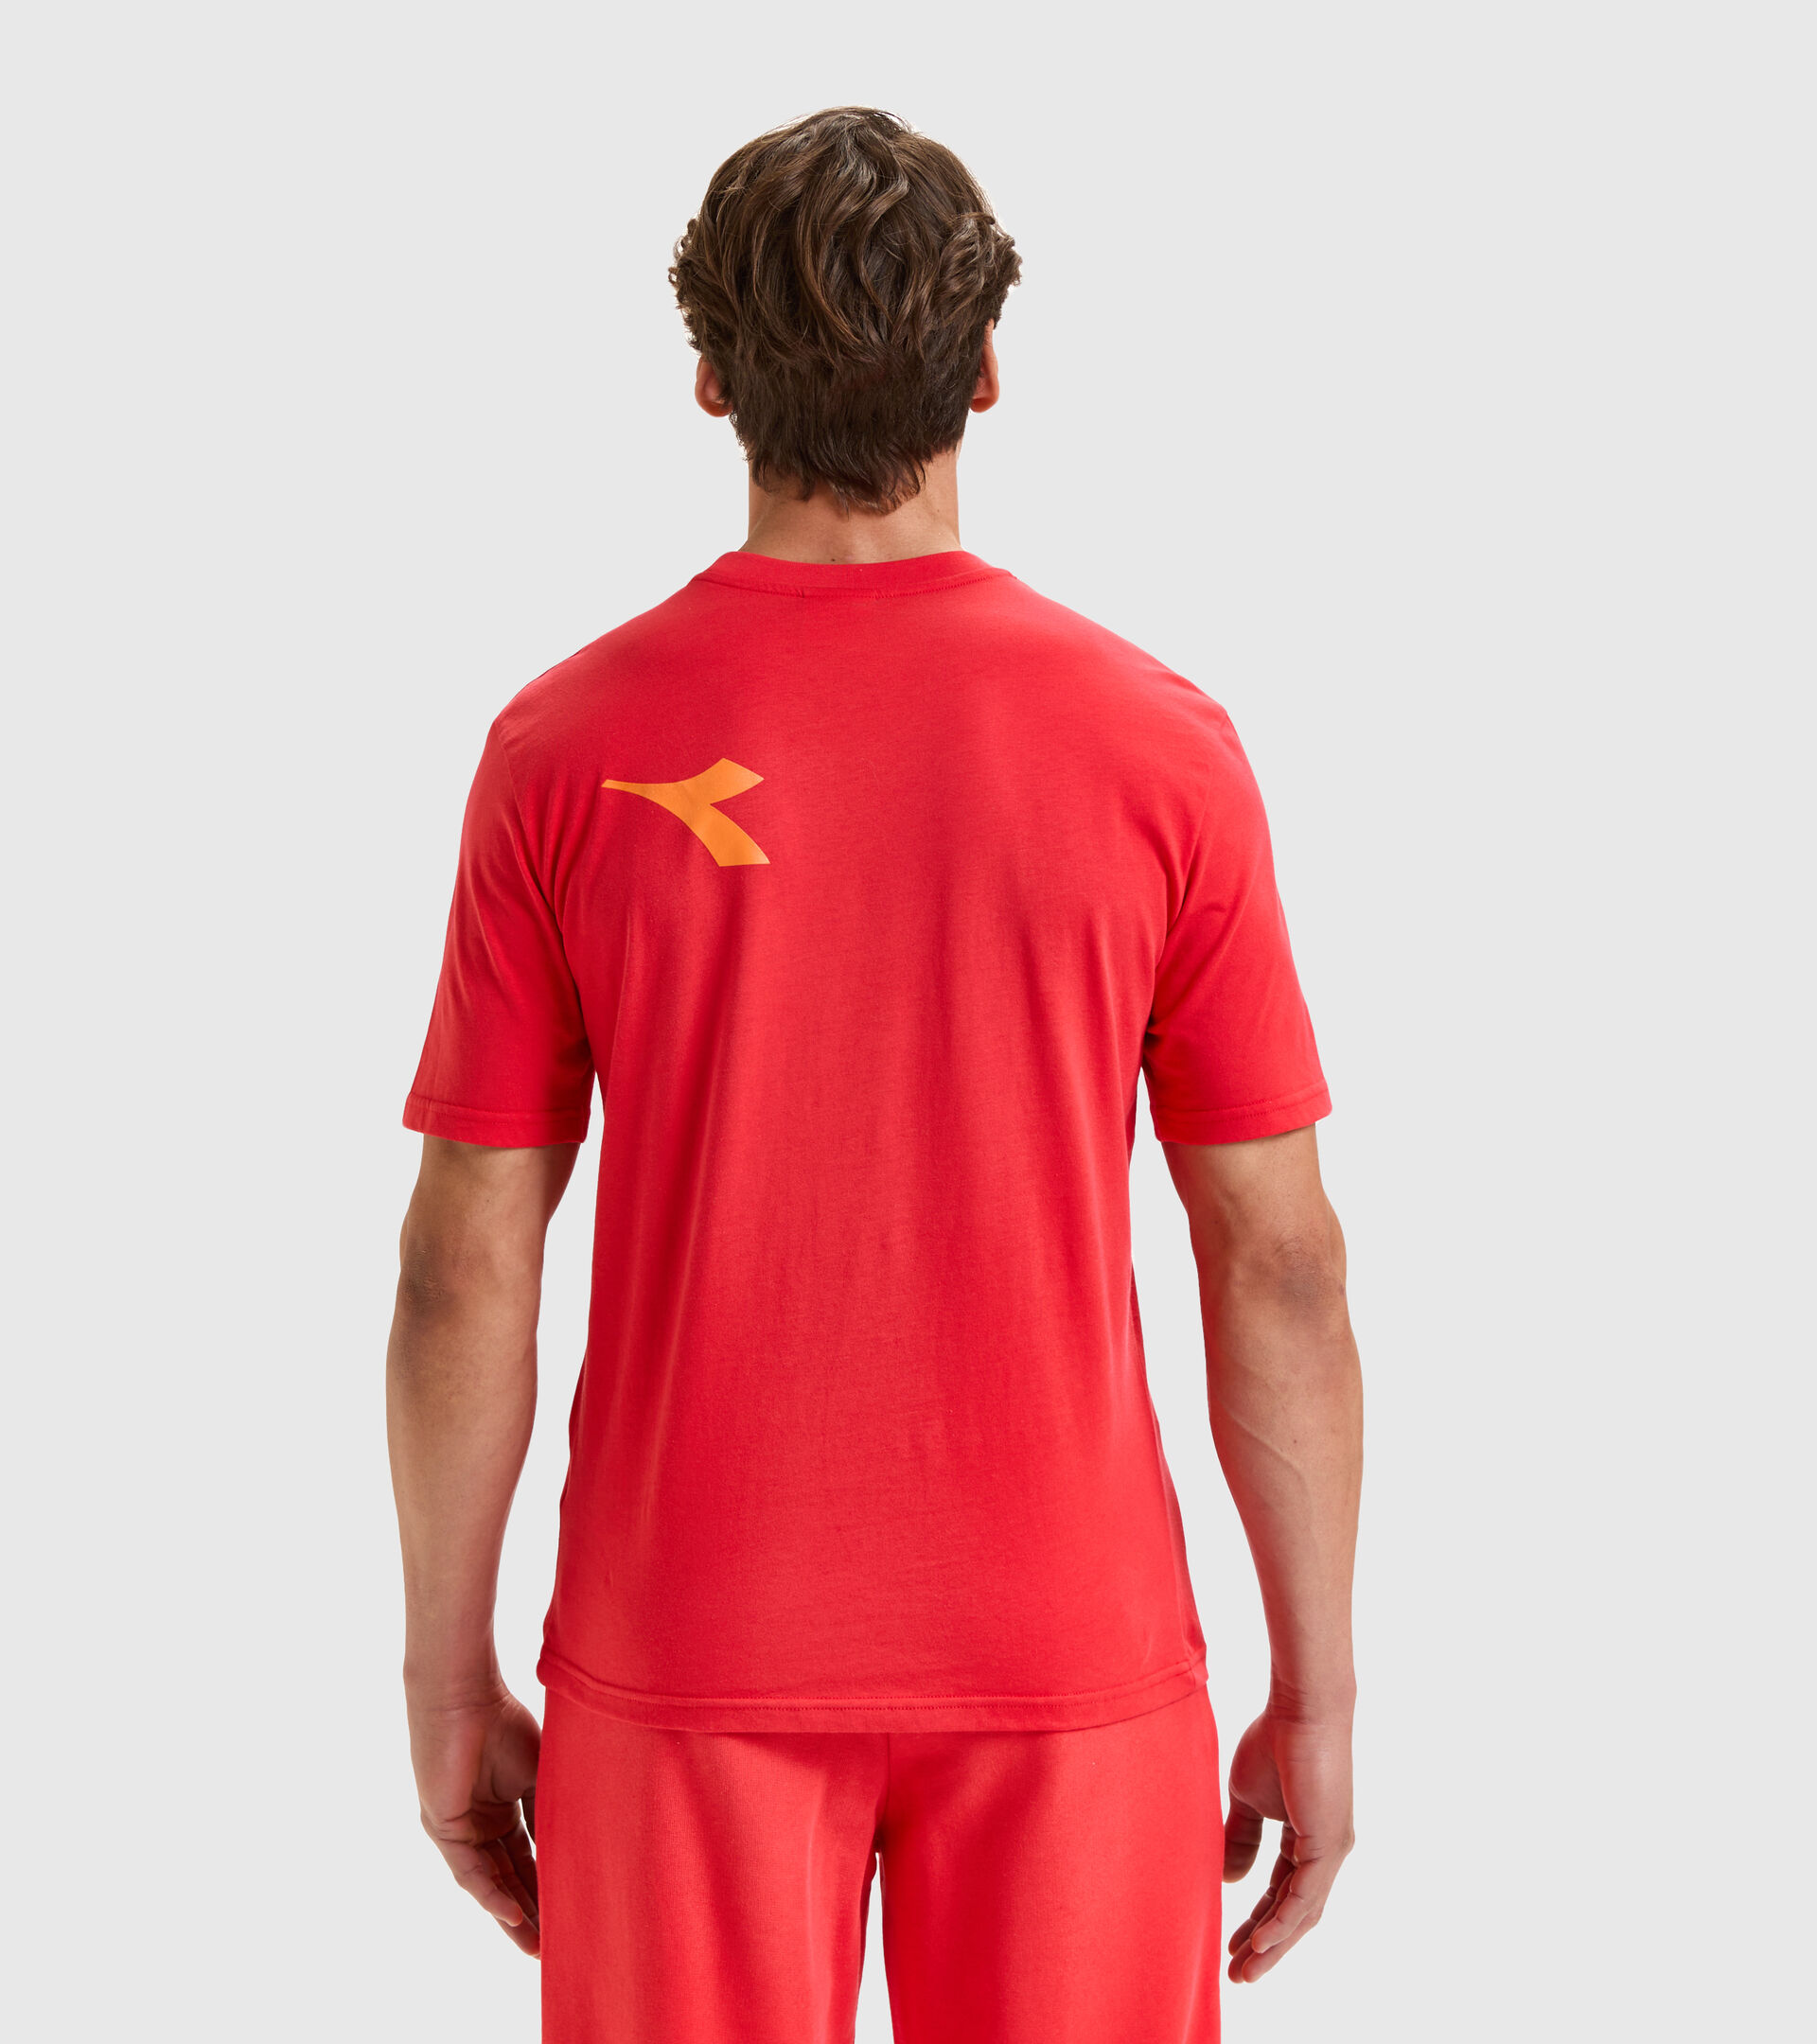 Cotton t-shirt - Unisex T-SHIRT SS MANIFESTO POPPY RED - Diadora